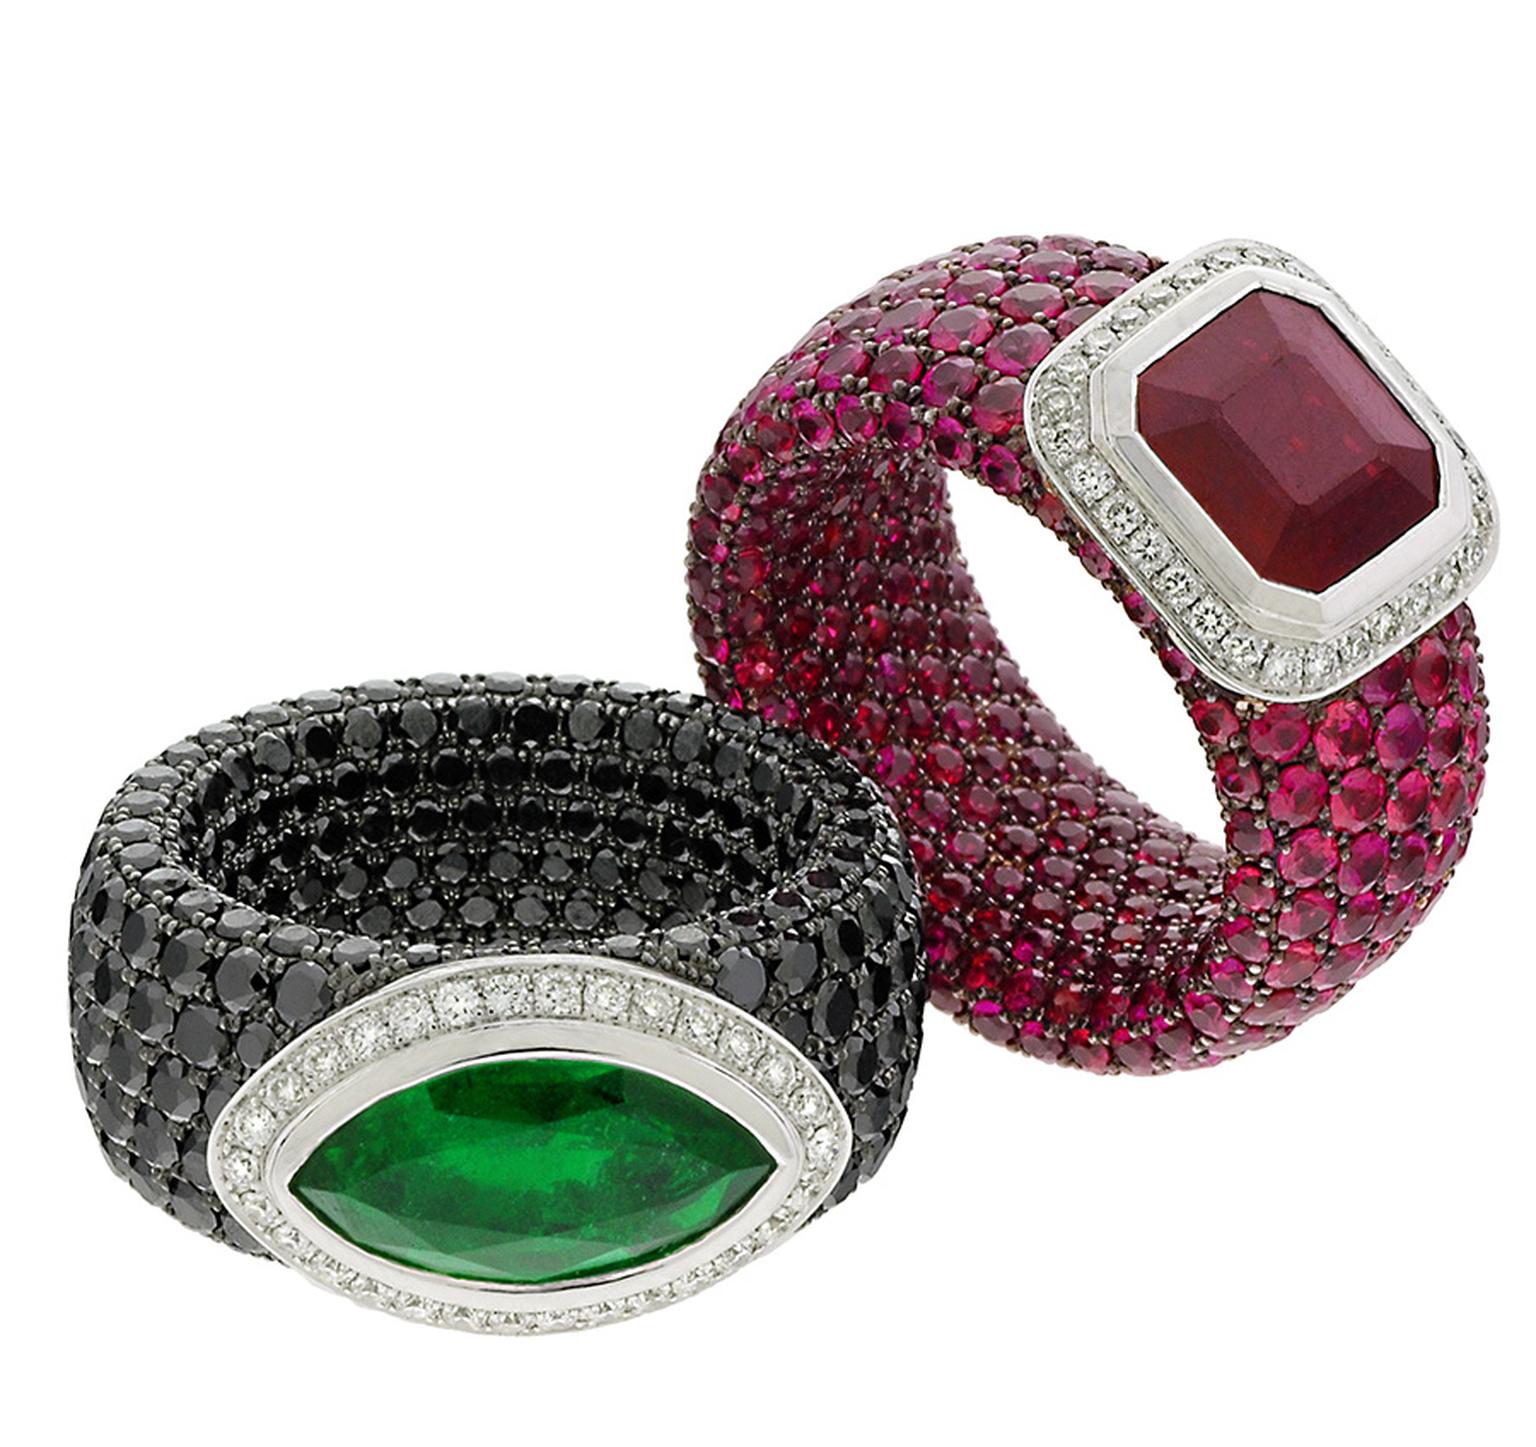 01-AVAKIAN-emerald-and-ruby-rings.jpg